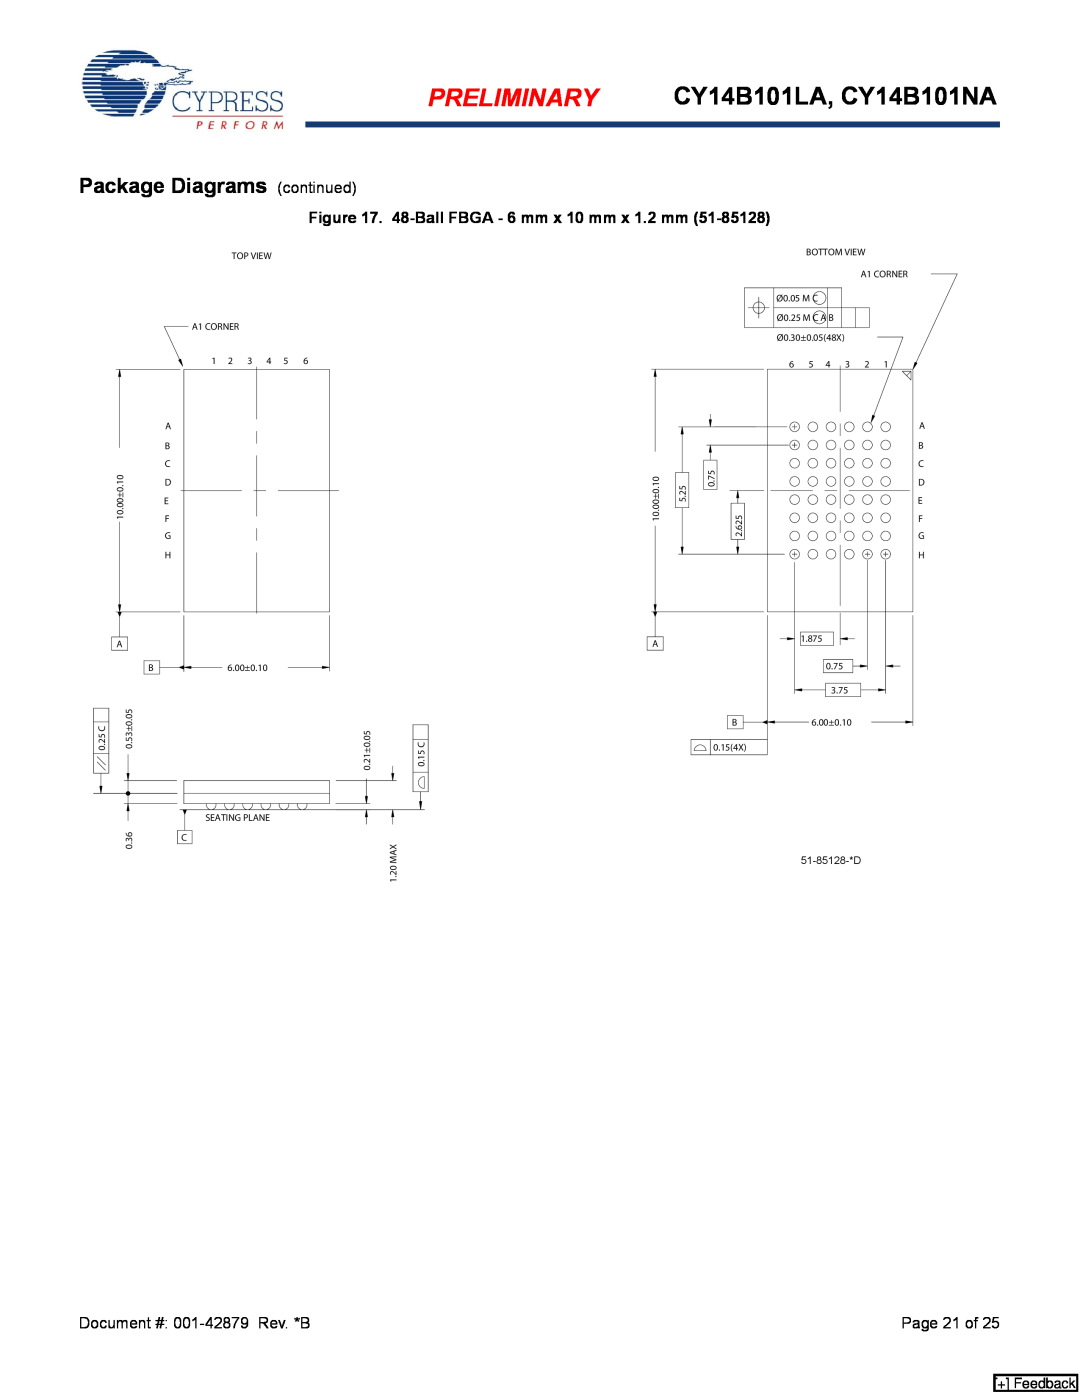 Cypress manual Package Diagrams continued, PRELIMINARY CY14B101LA, CY14B101NA, 48-Ball FBGA - 6 mm x 10 mm x 1.2 mm 